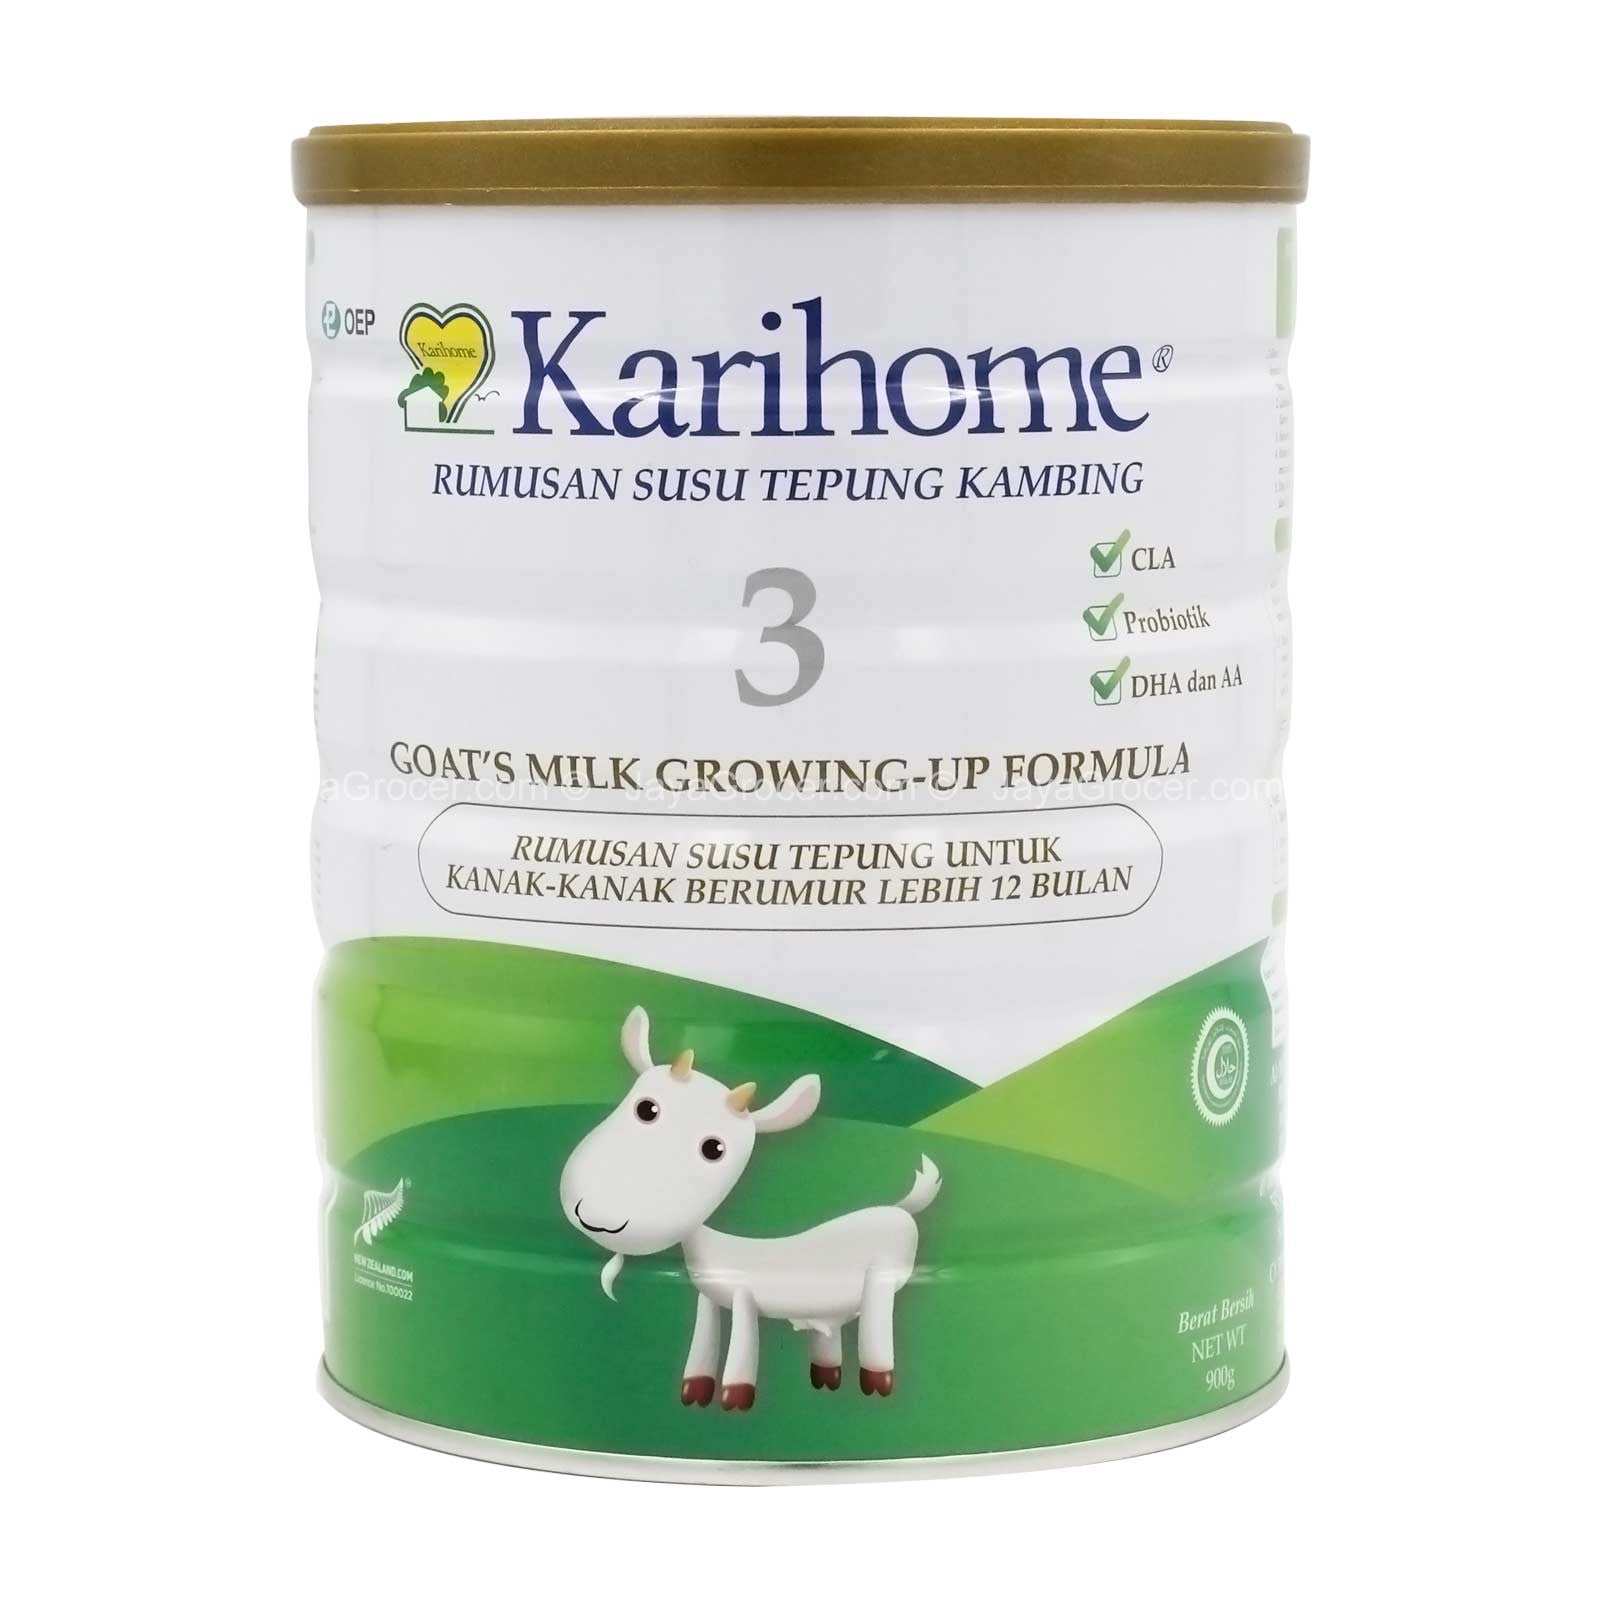 Karihome Step 3 Goat's Milk Growing-Up Formula 900g For Children 12 Months and Above